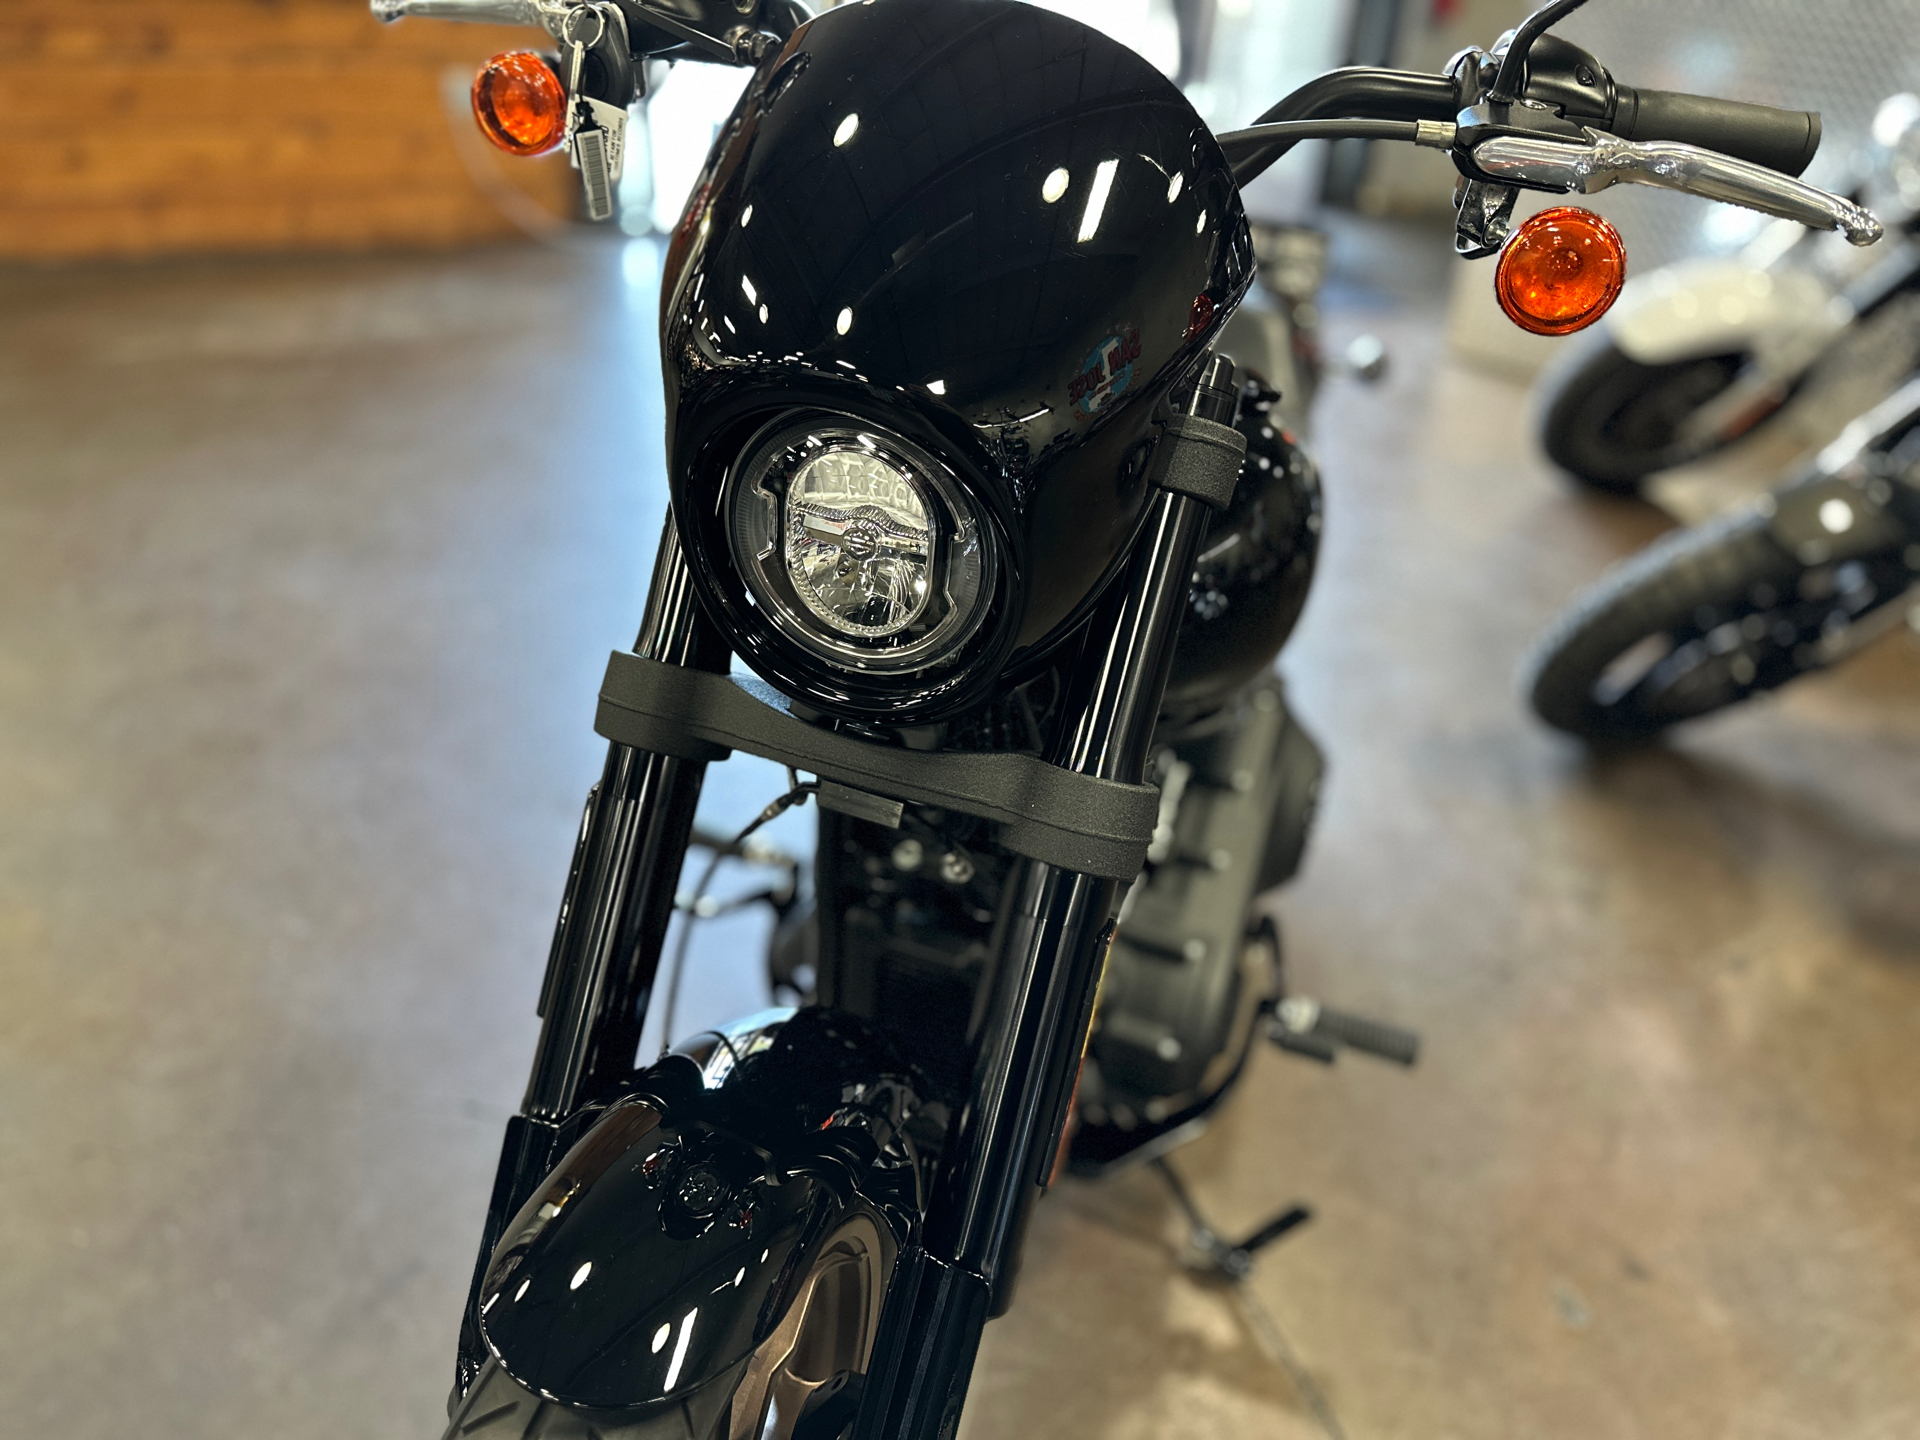 2021 Harley-Davidson Low Rider®S in San Jose, California - Photo 15